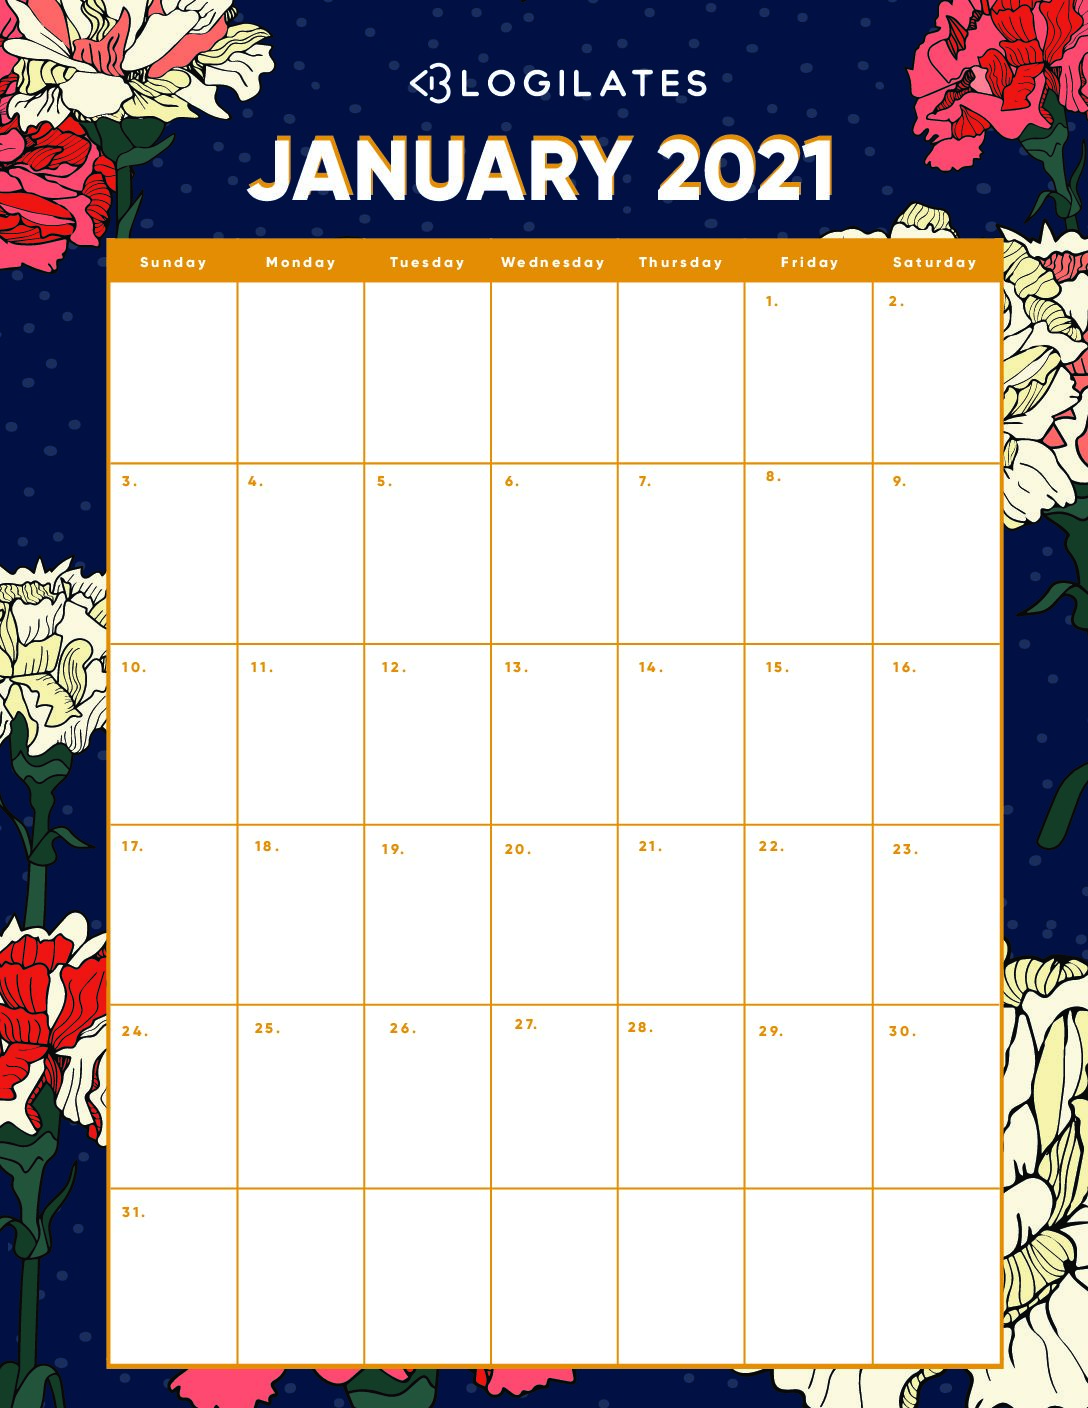 Your Free 2021 Printable Calendars Are Here Laptrinhx News